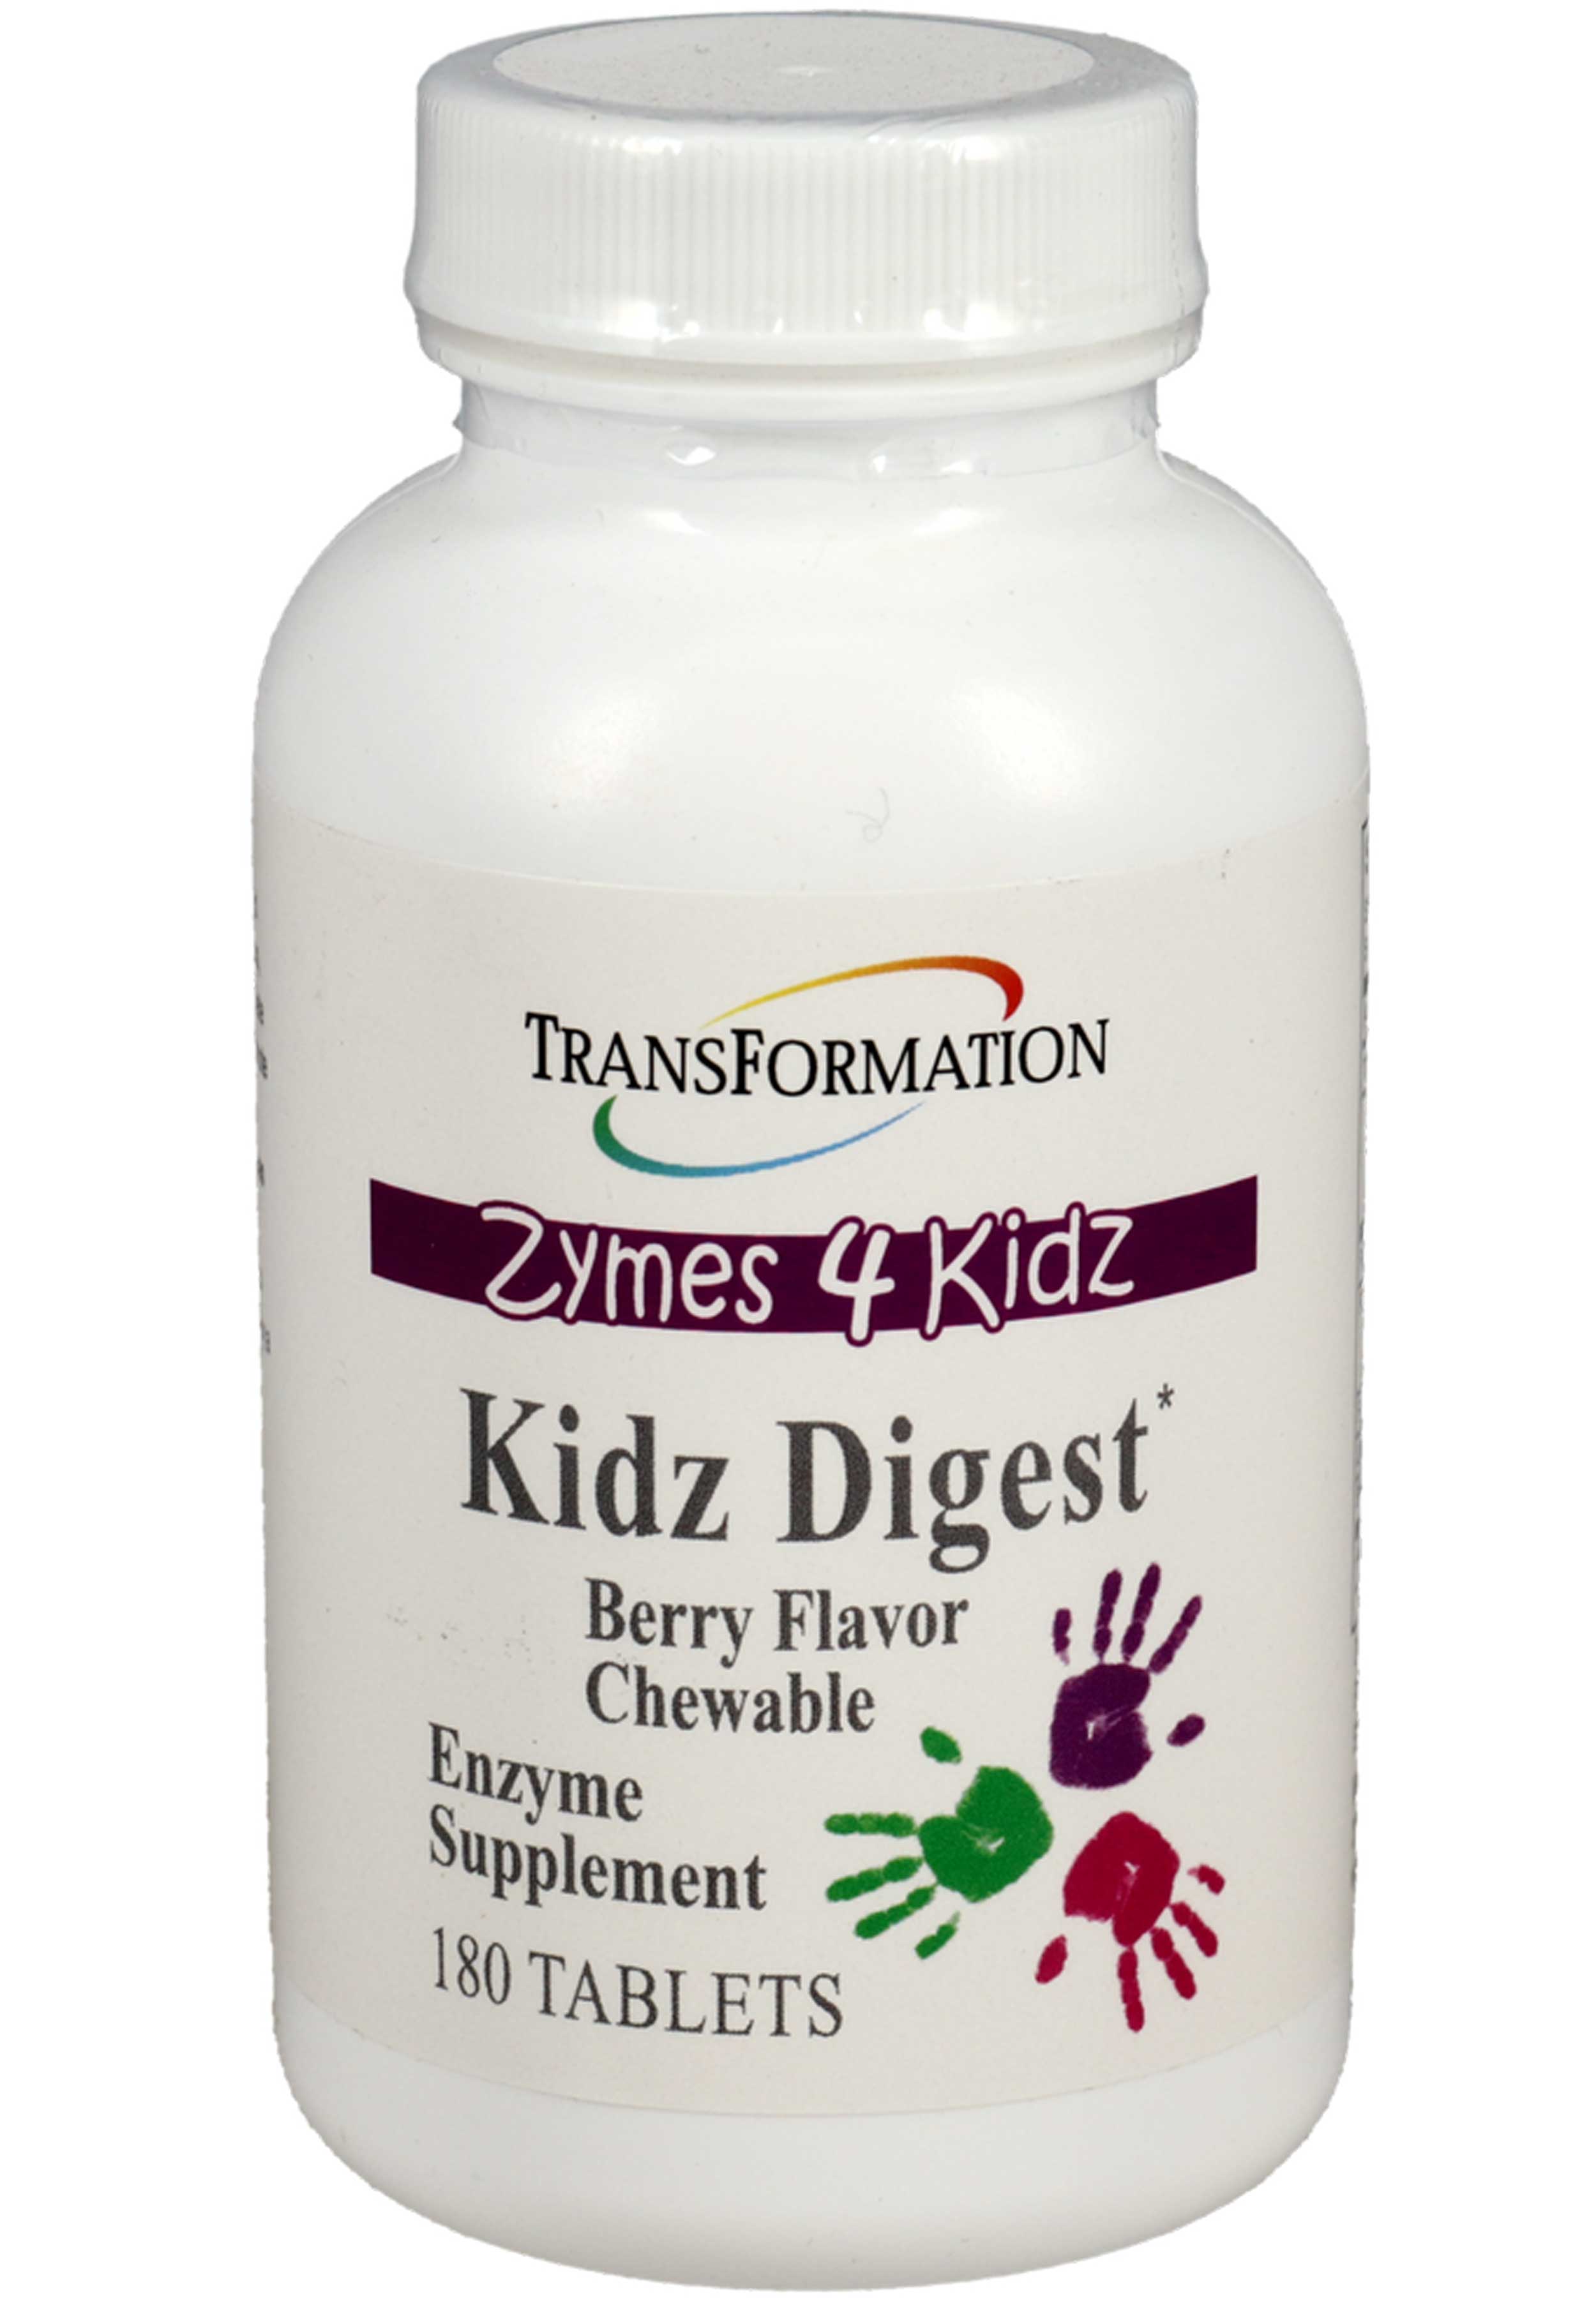 Transformation Enzyme Kidz Digest Chewable